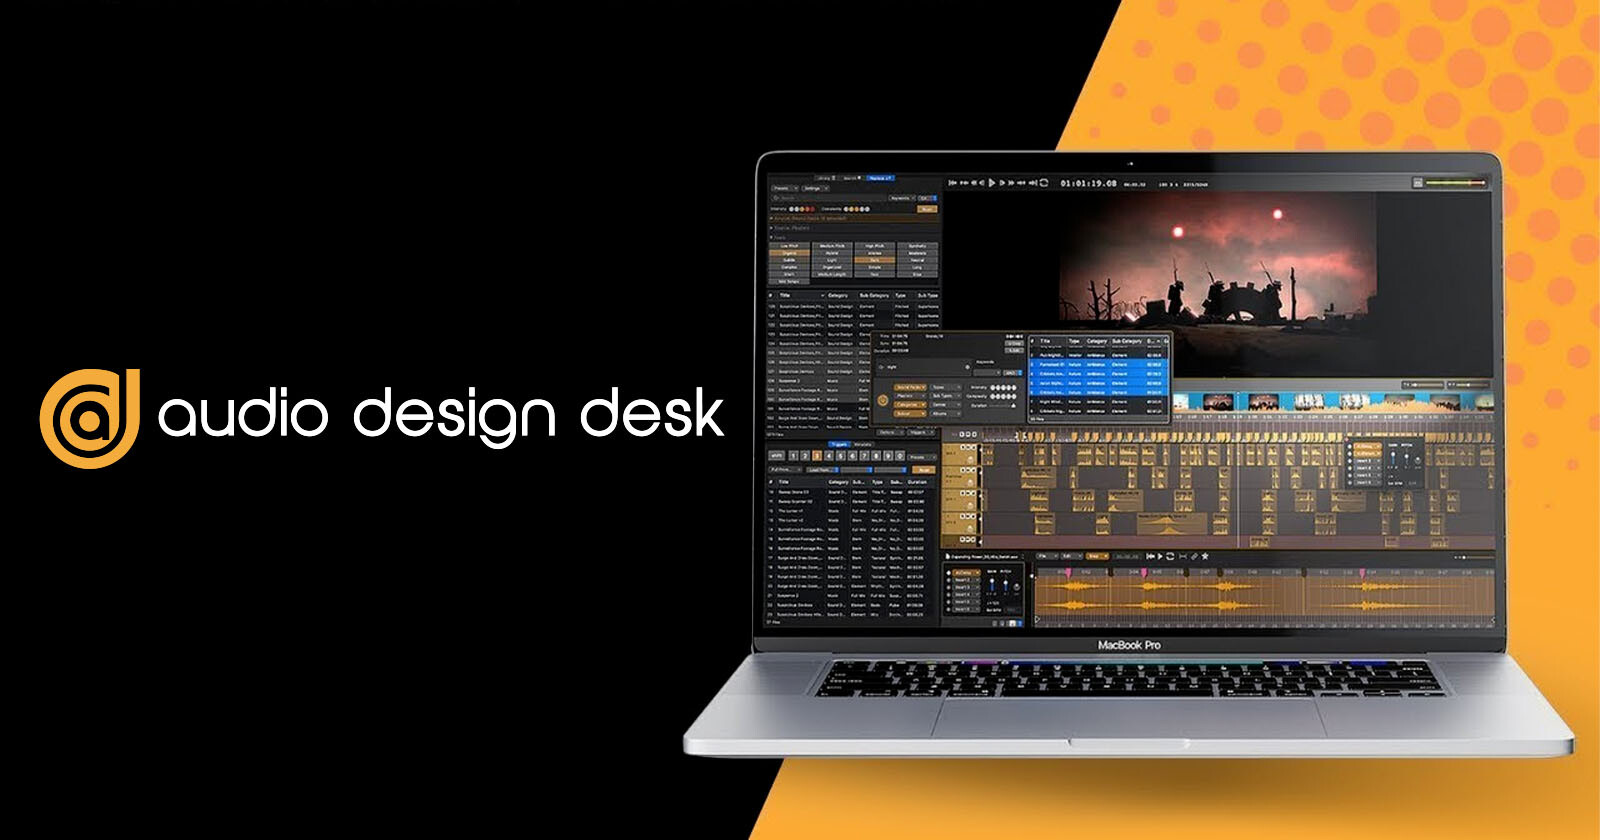  audio design desk software uses know where add 